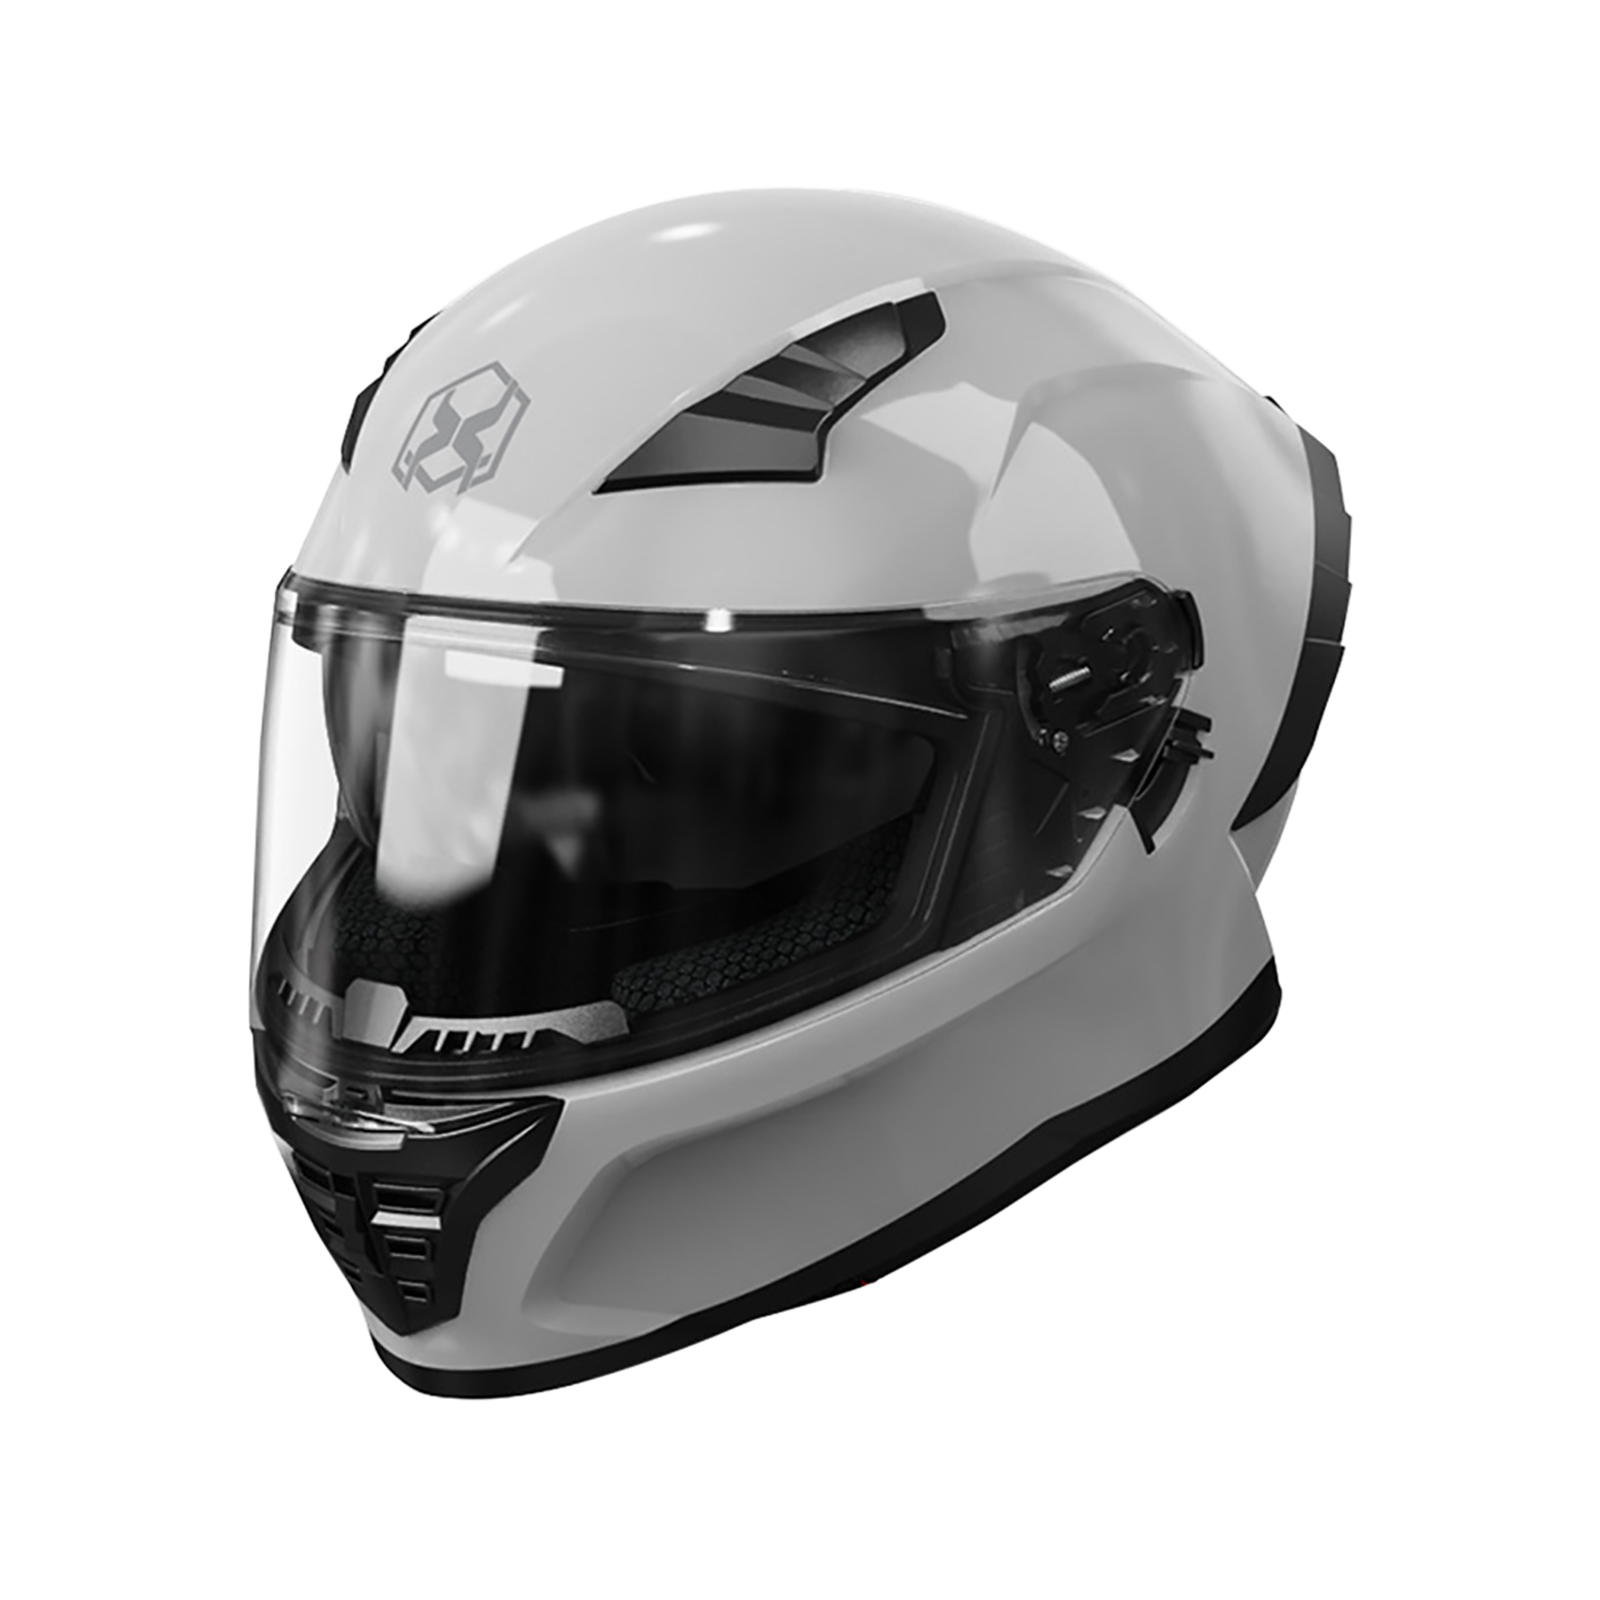 TotalPro – Motorcycle Full Face Helmet with Sun Visor Air Ventilation Dot Approved Motorbike Street Bike Helmet Gray XL Size